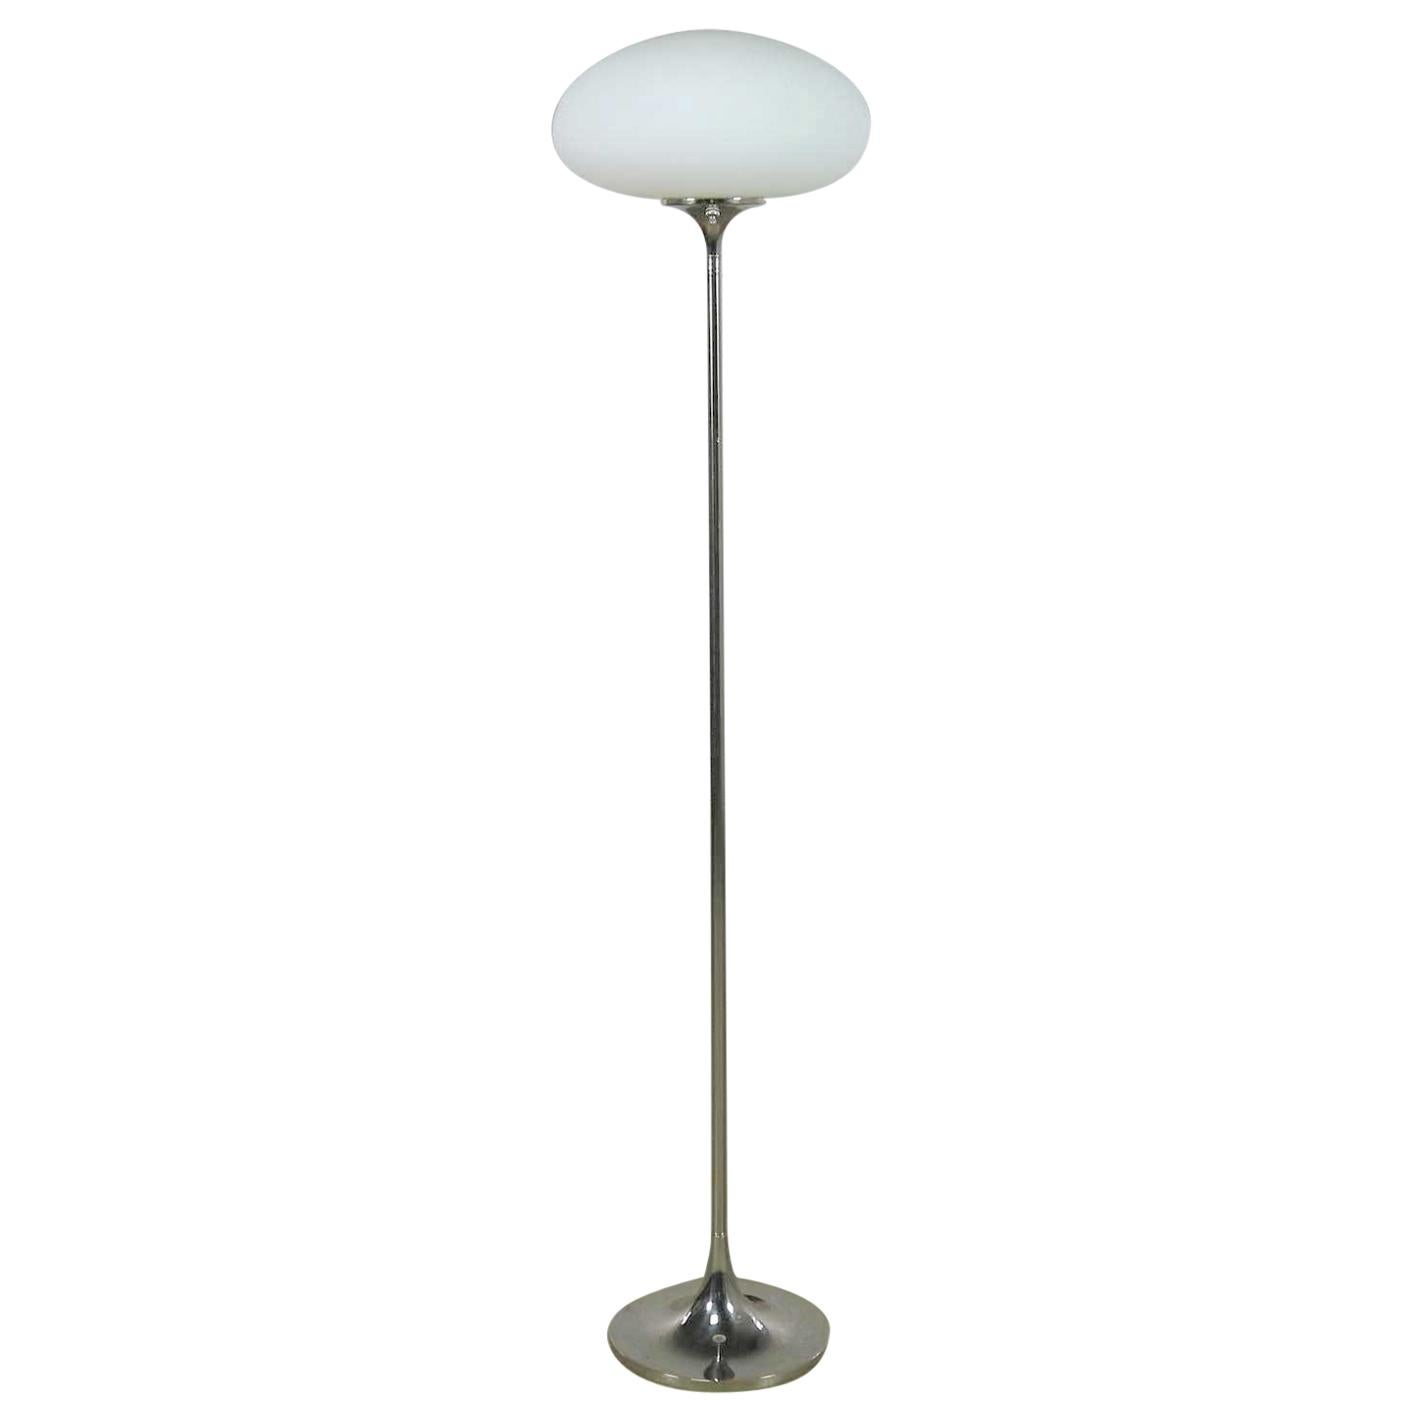 Mid-Century Modern Mushroom Floor Lamp in Chrome by the Laurel Lamp Company